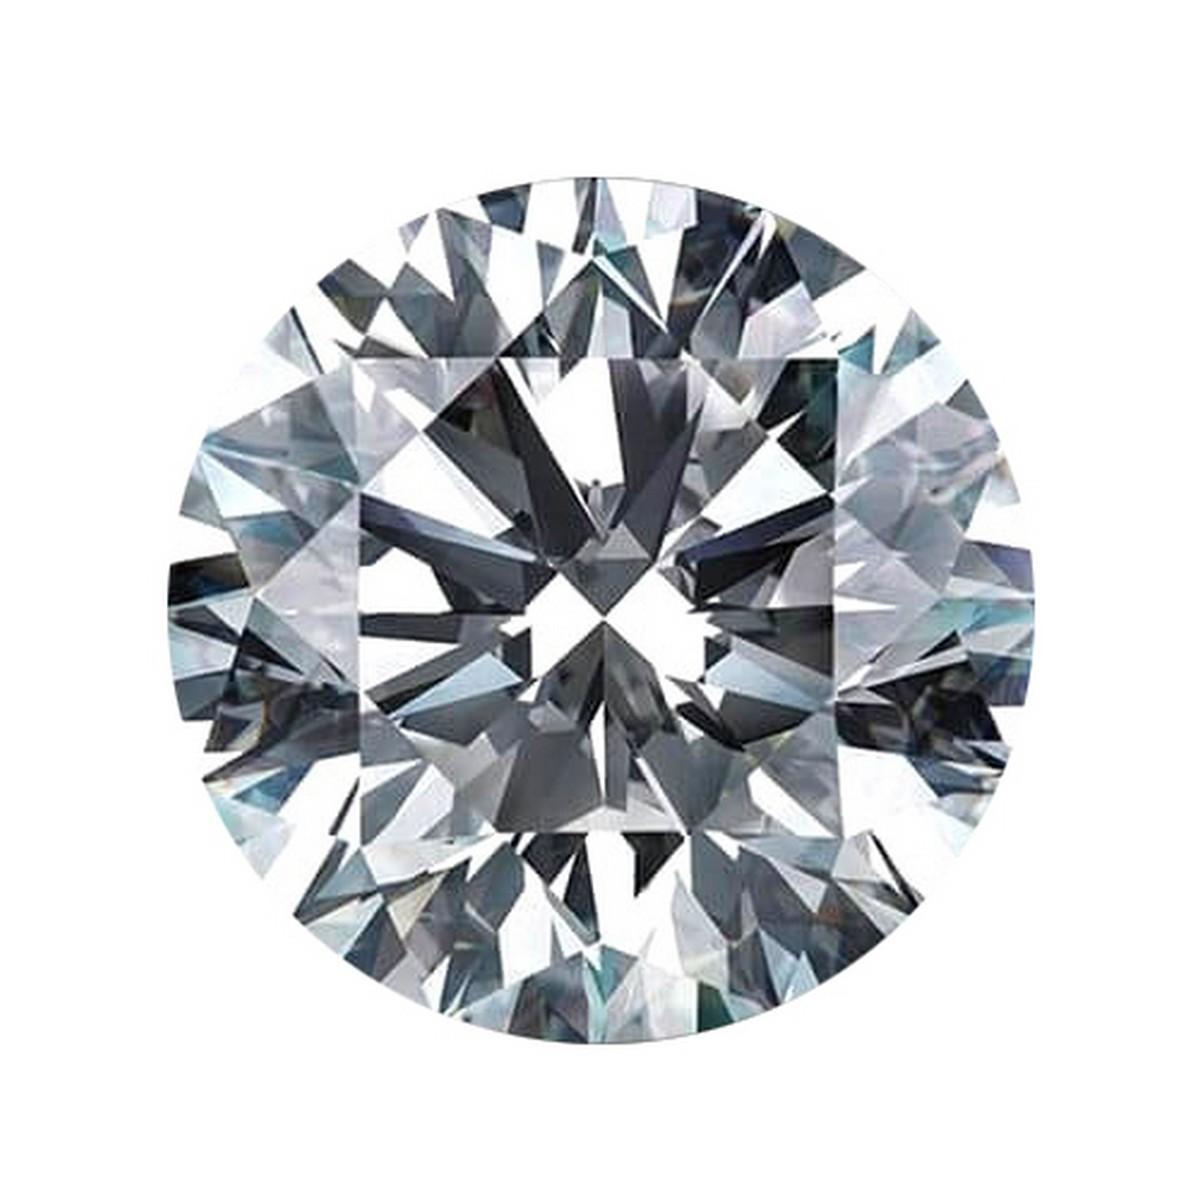 2.88 ctw. VVS2 IGI Certified Round Cut Loose Diamond (LAB GROWN)